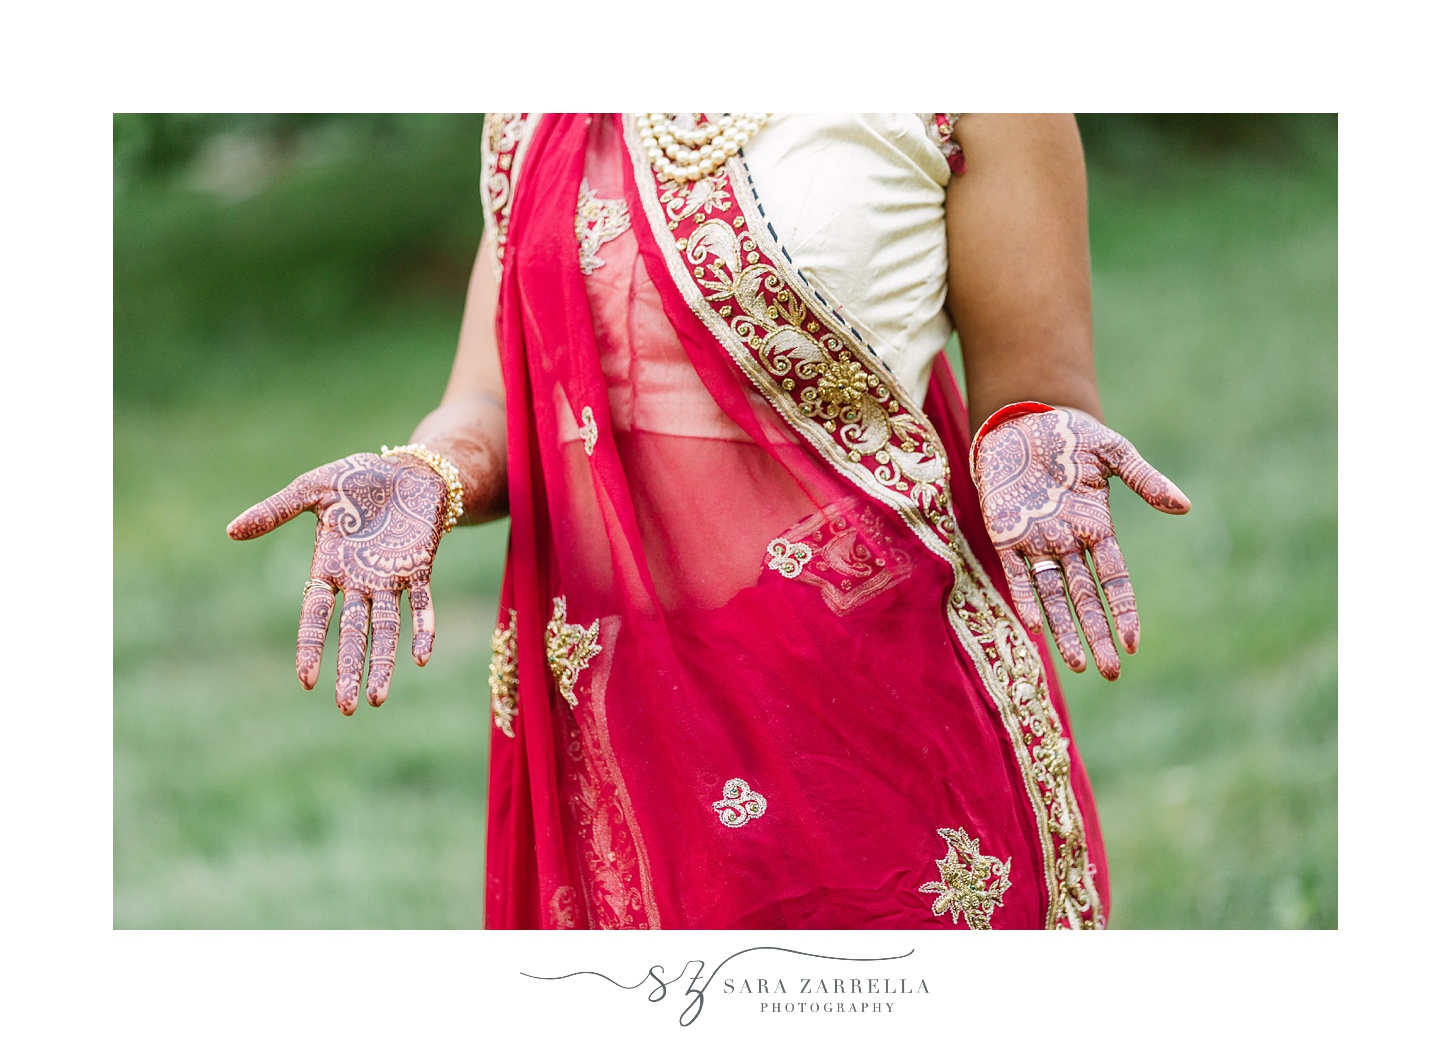 bride shows Henna tattoos on hand during wedding day